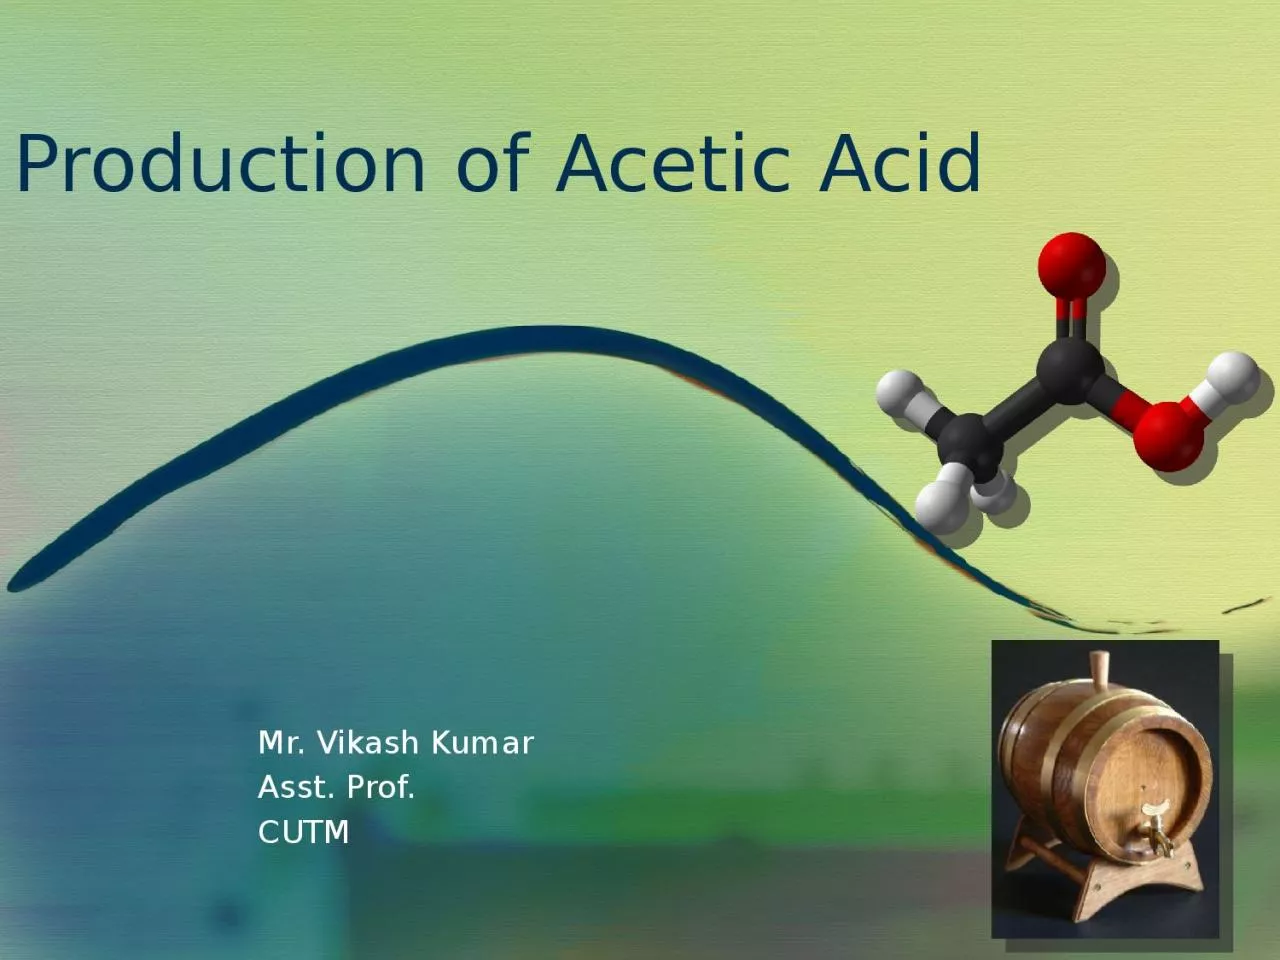 Production of Acetic Acid